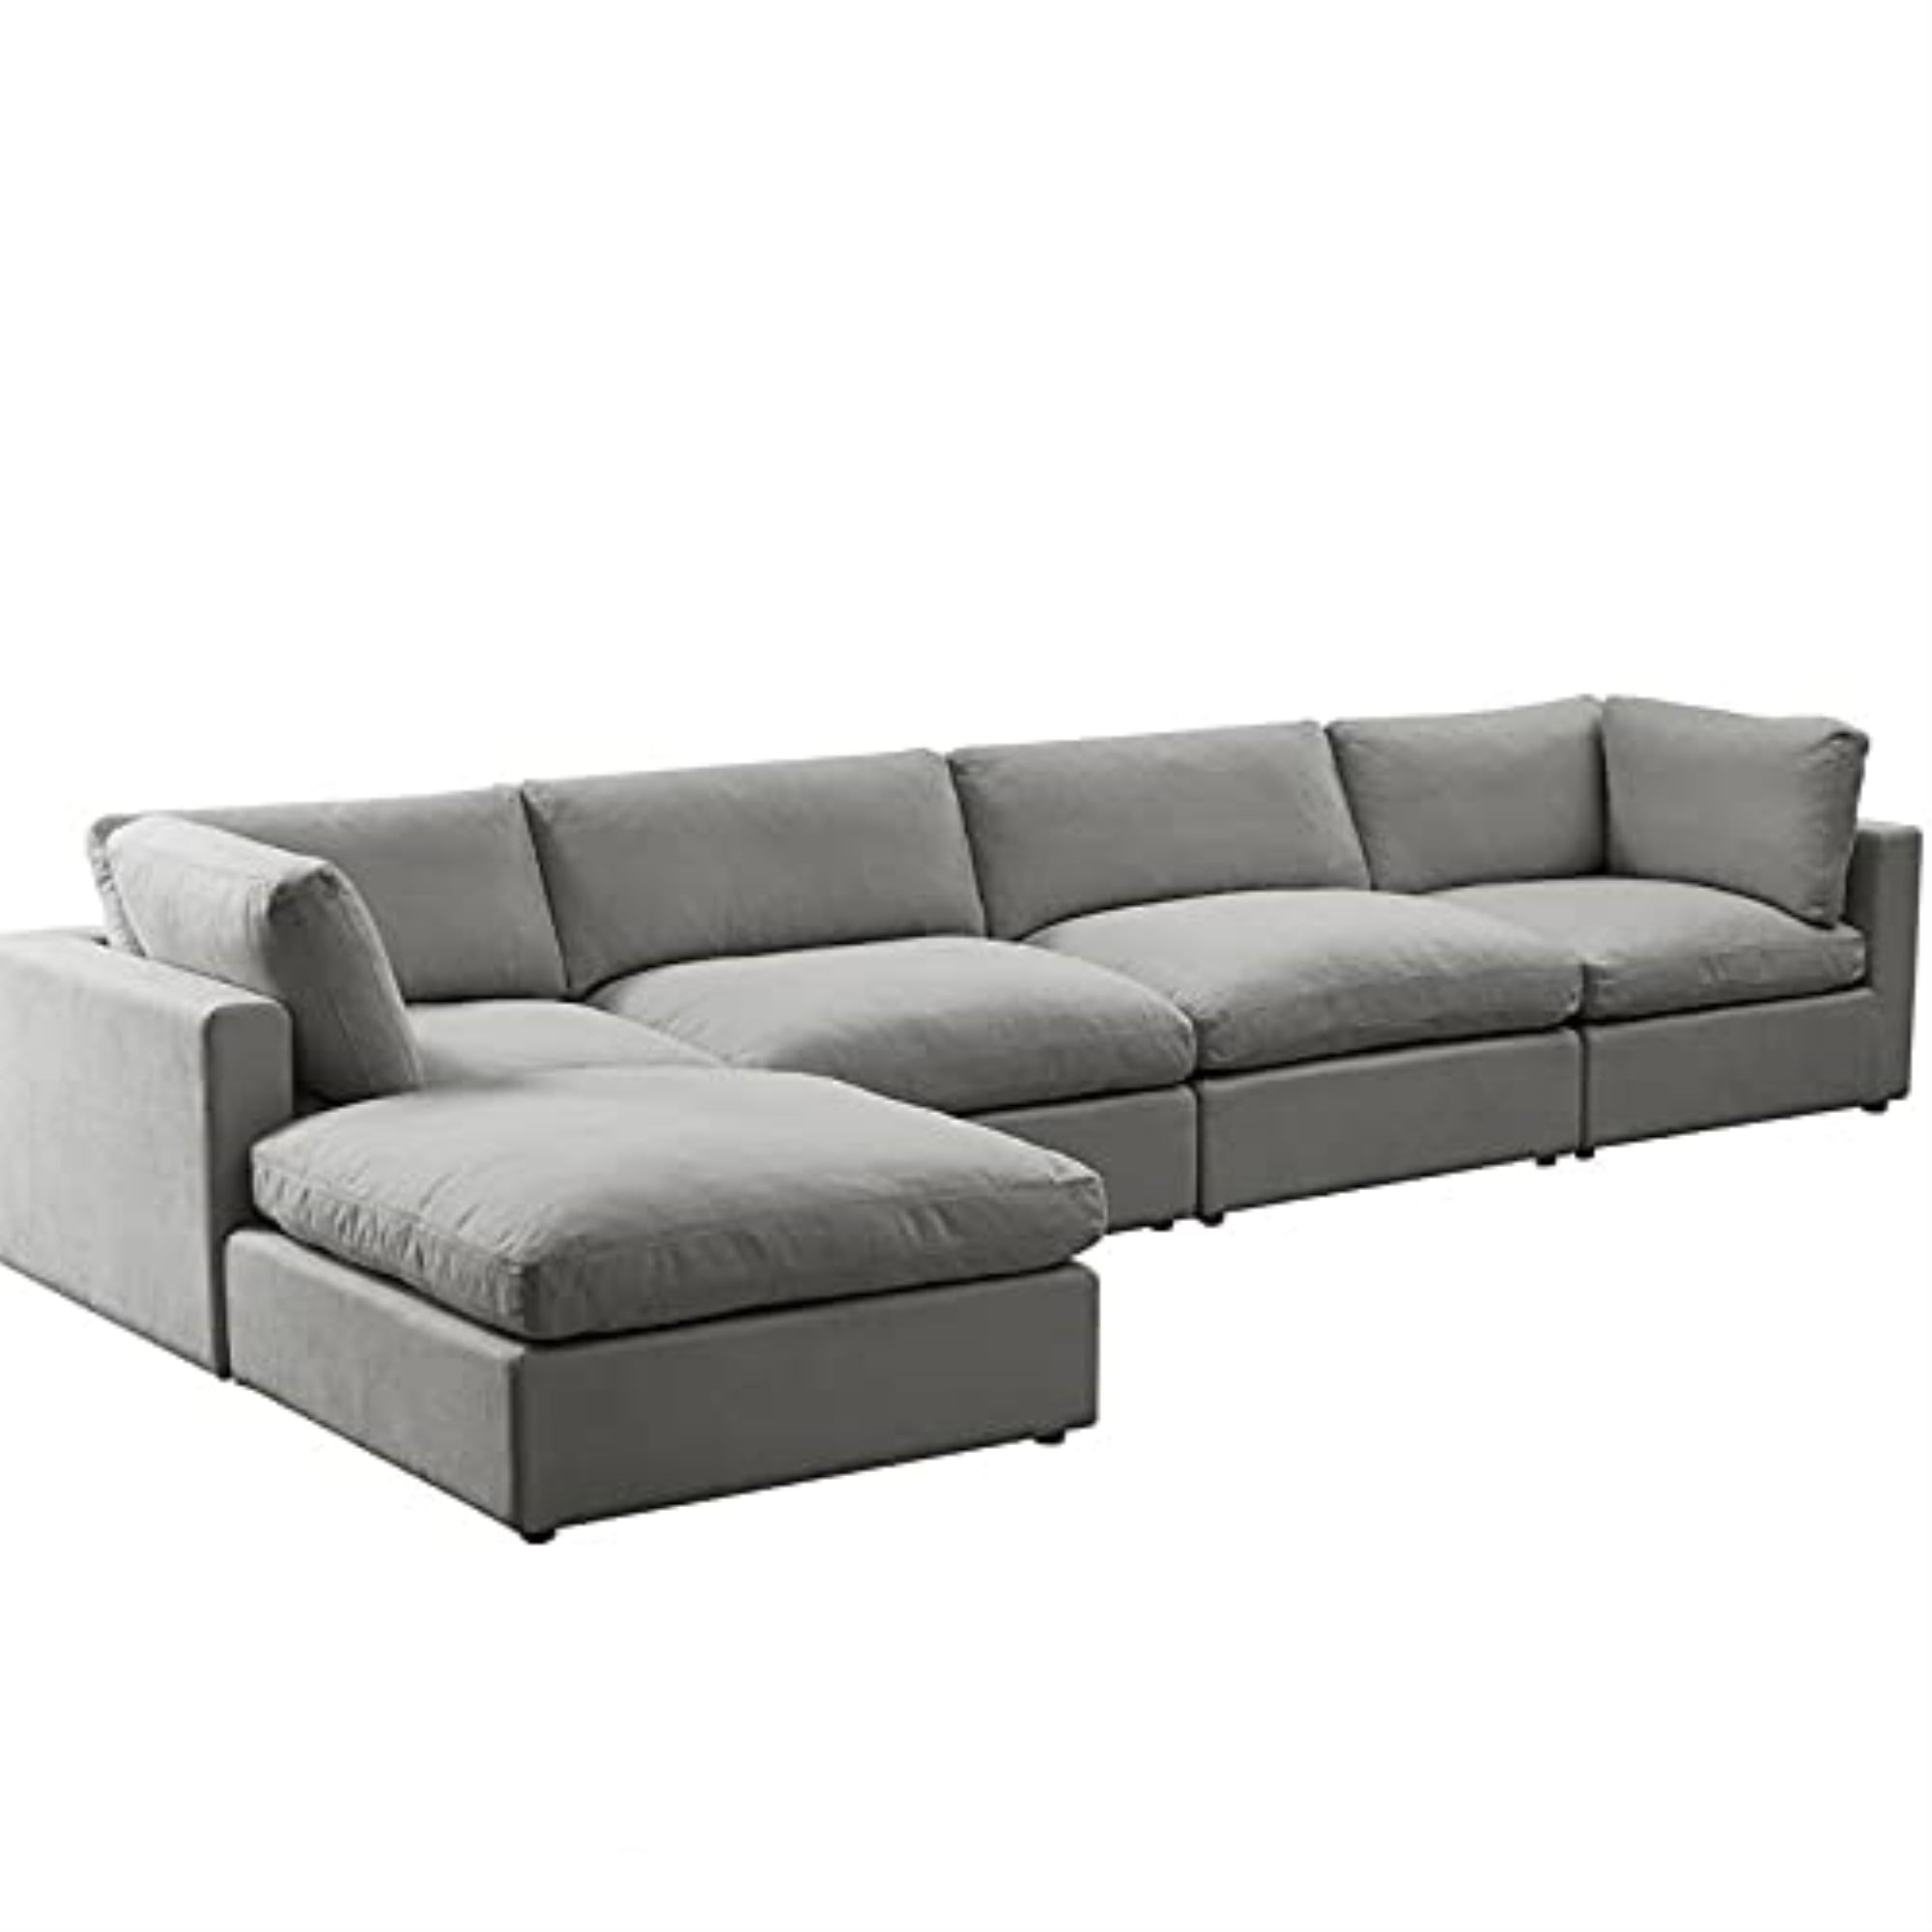 Kaelynn Linen Sofas Chaise, Grey – Walmart Inside Gray Linen Sofas (View 2 of 15)